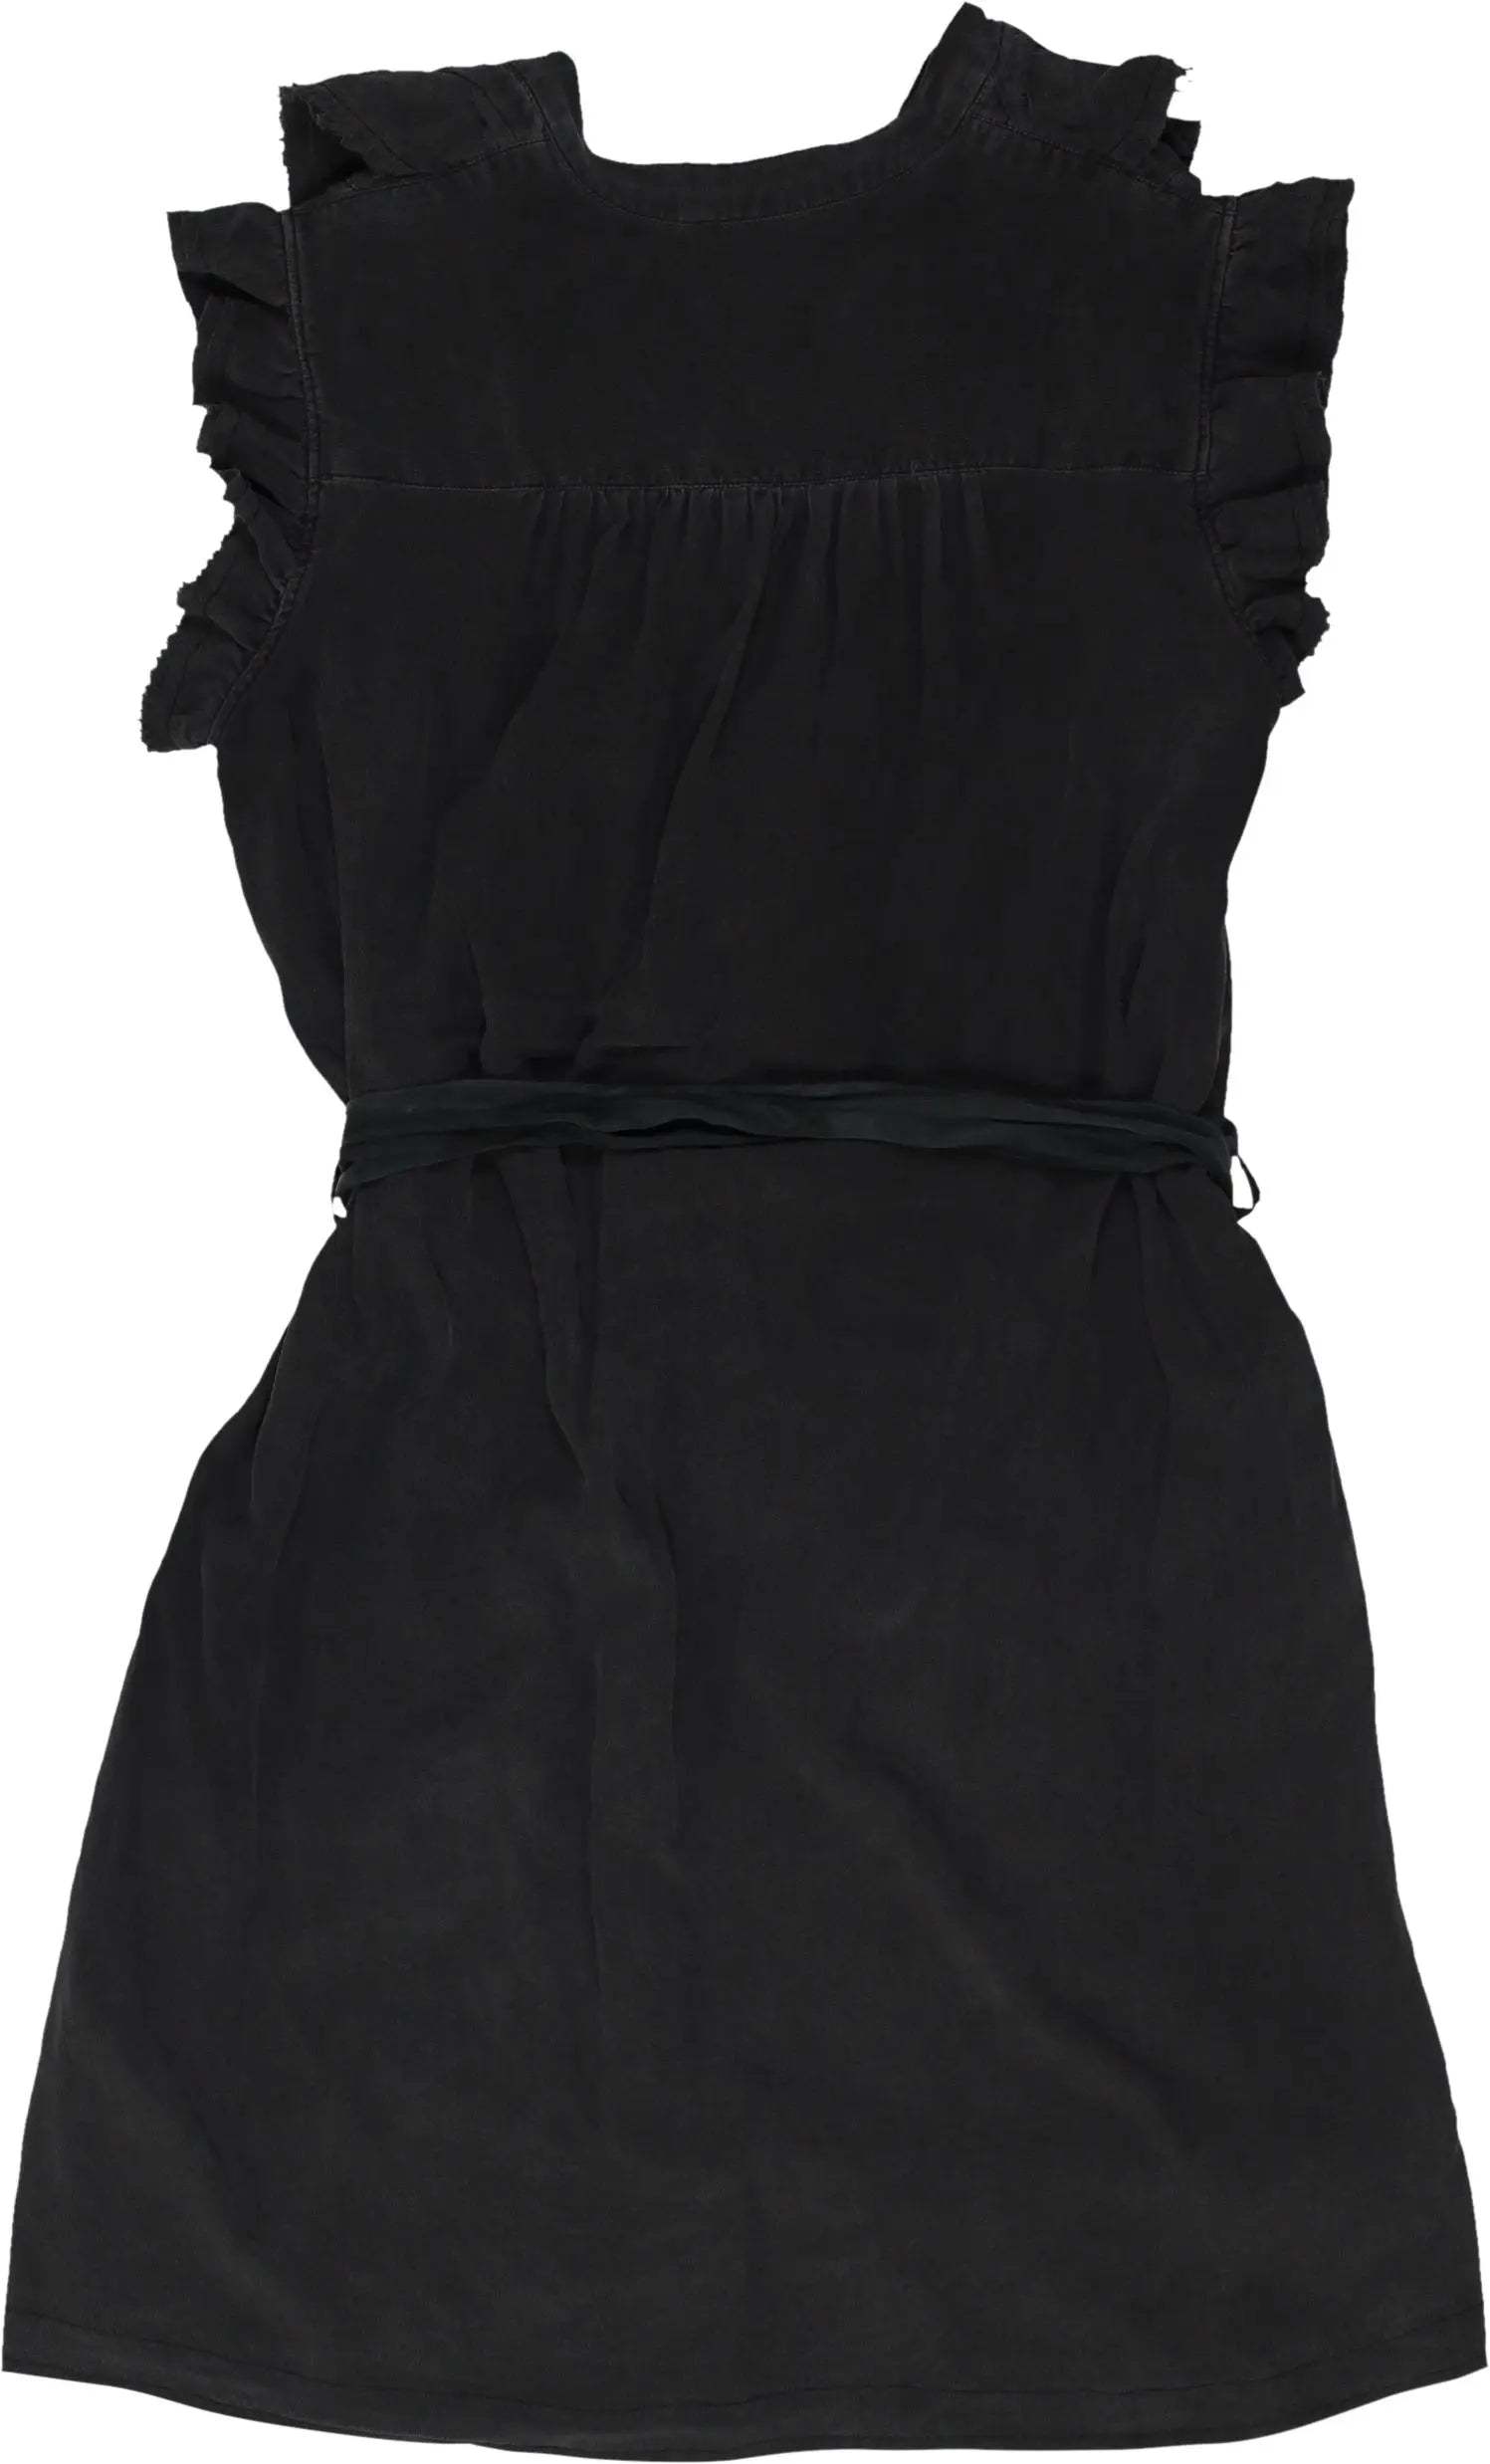 Gann - Silk Dress- ThriftTale.com - Vintage and second handclothing